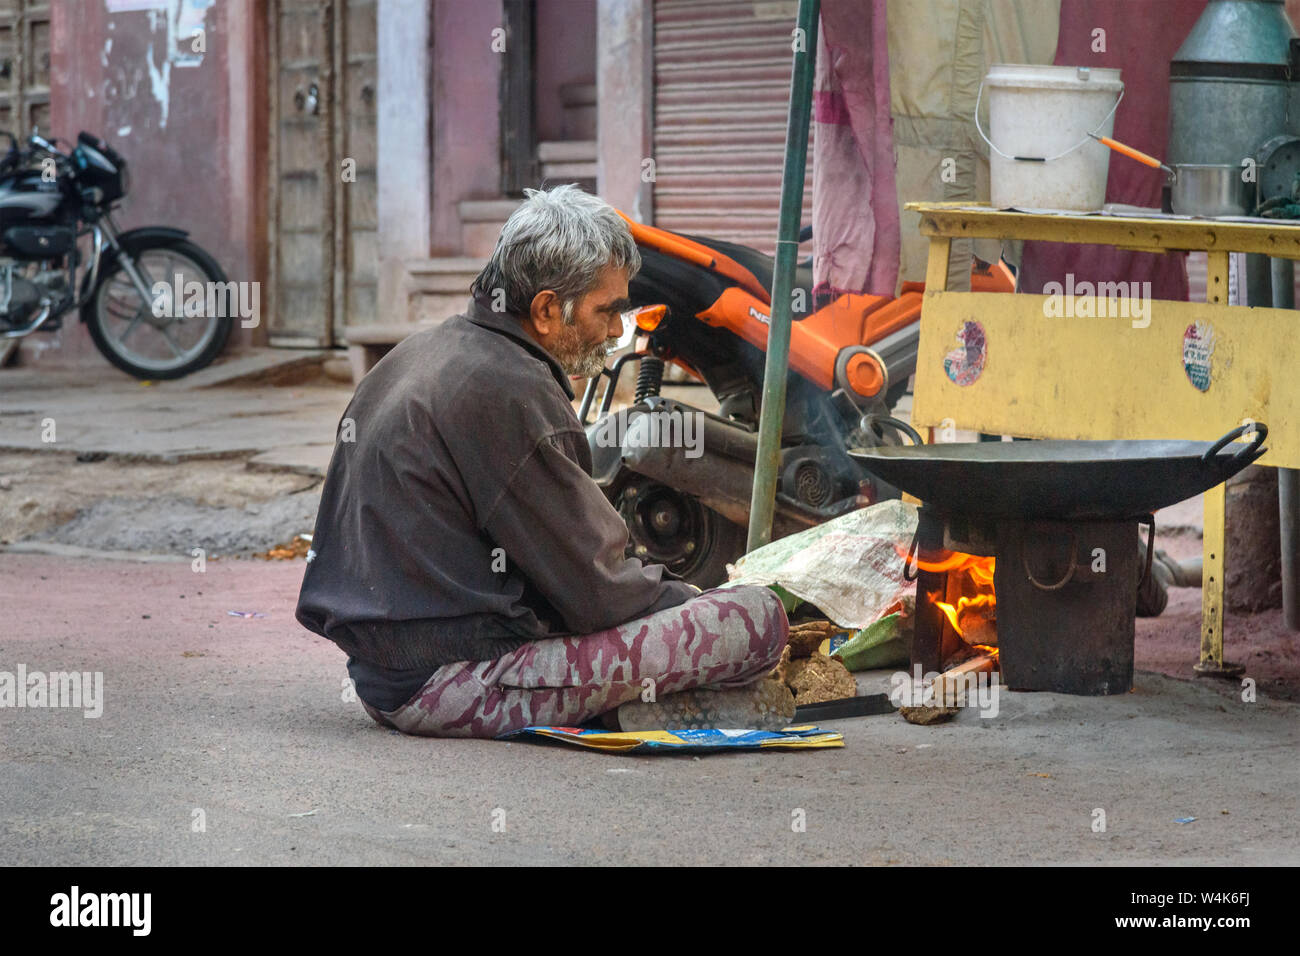 Bikaner, India - February 11, 2019: Man preparing food on fire in market at Bikaner. Rajasthan Stock Photo